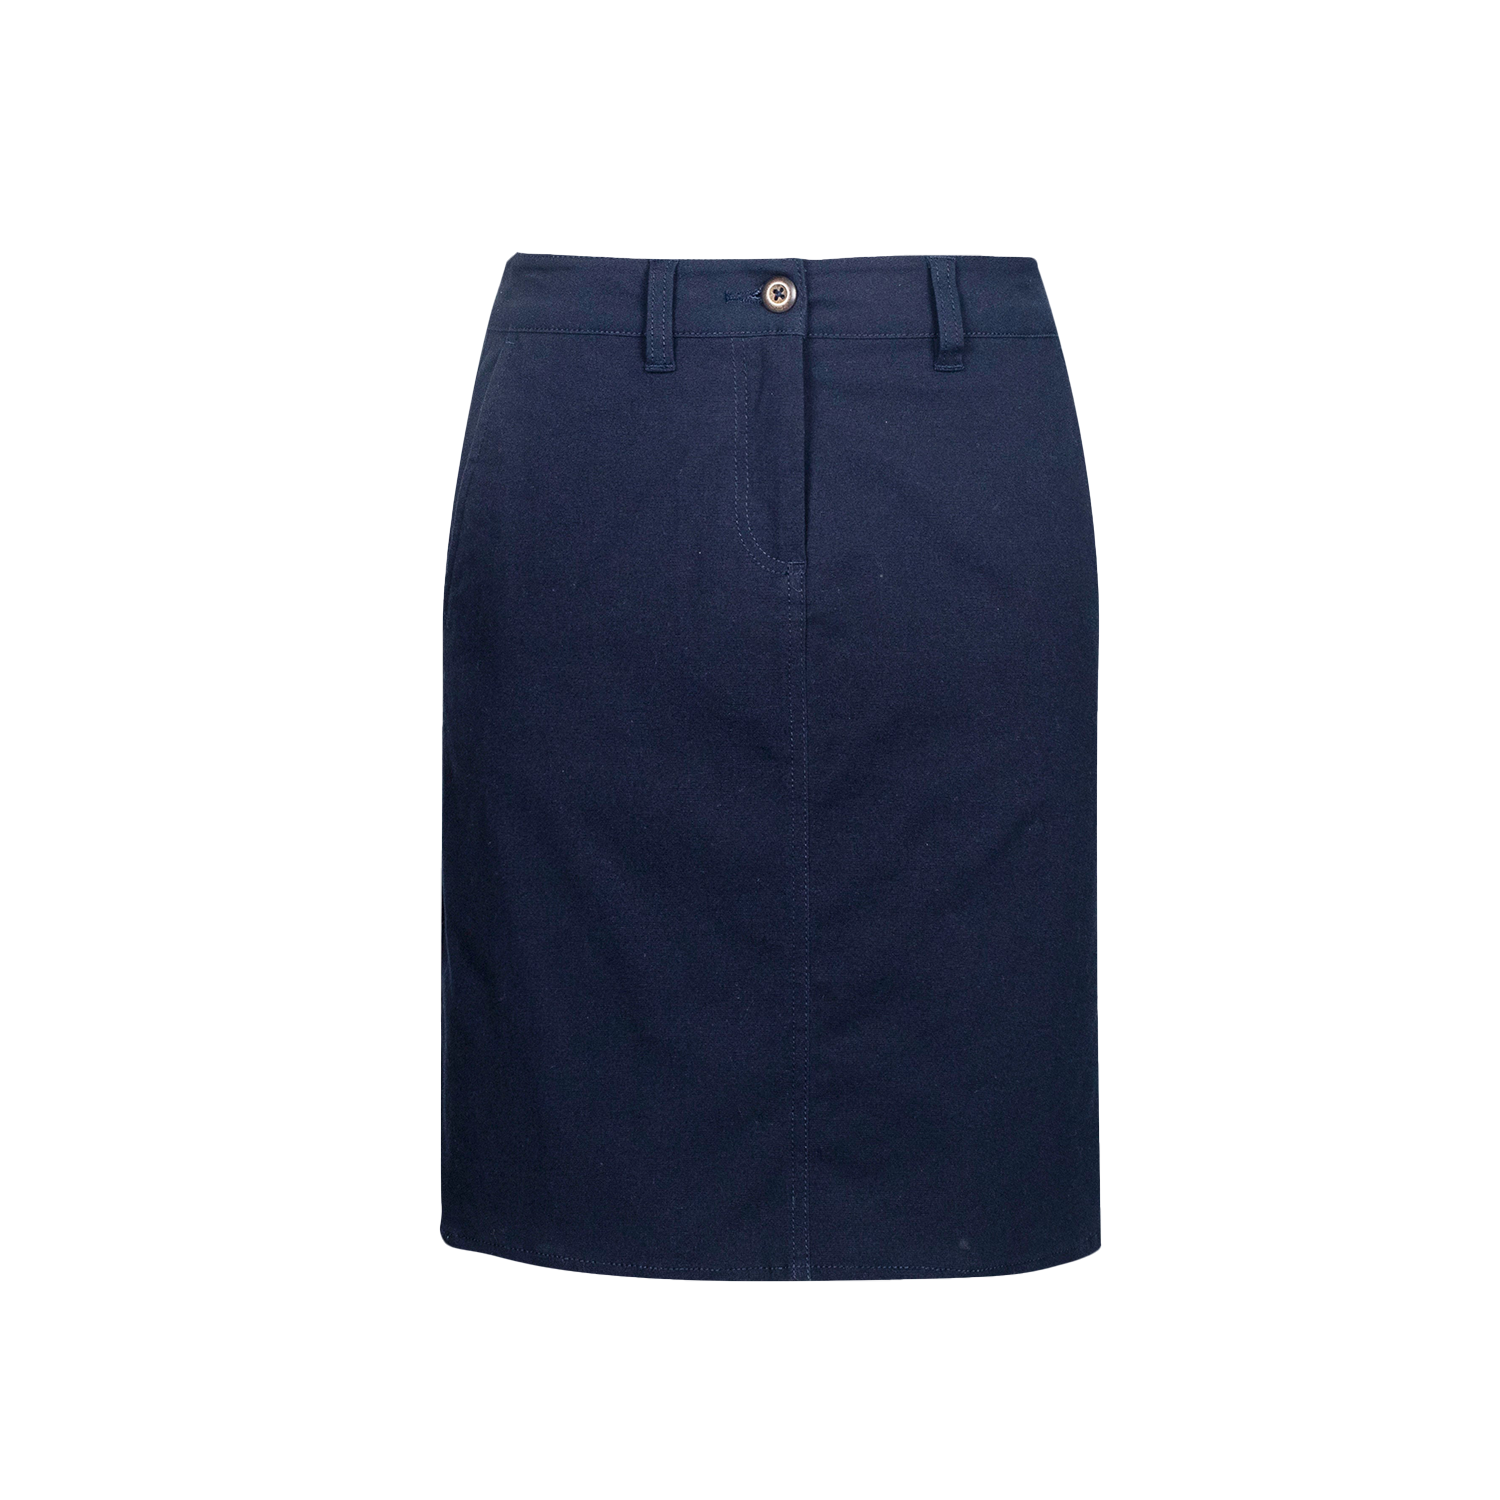 Biz Collection Women's Lawson Chino Skirt - Navy - Totally Workwear